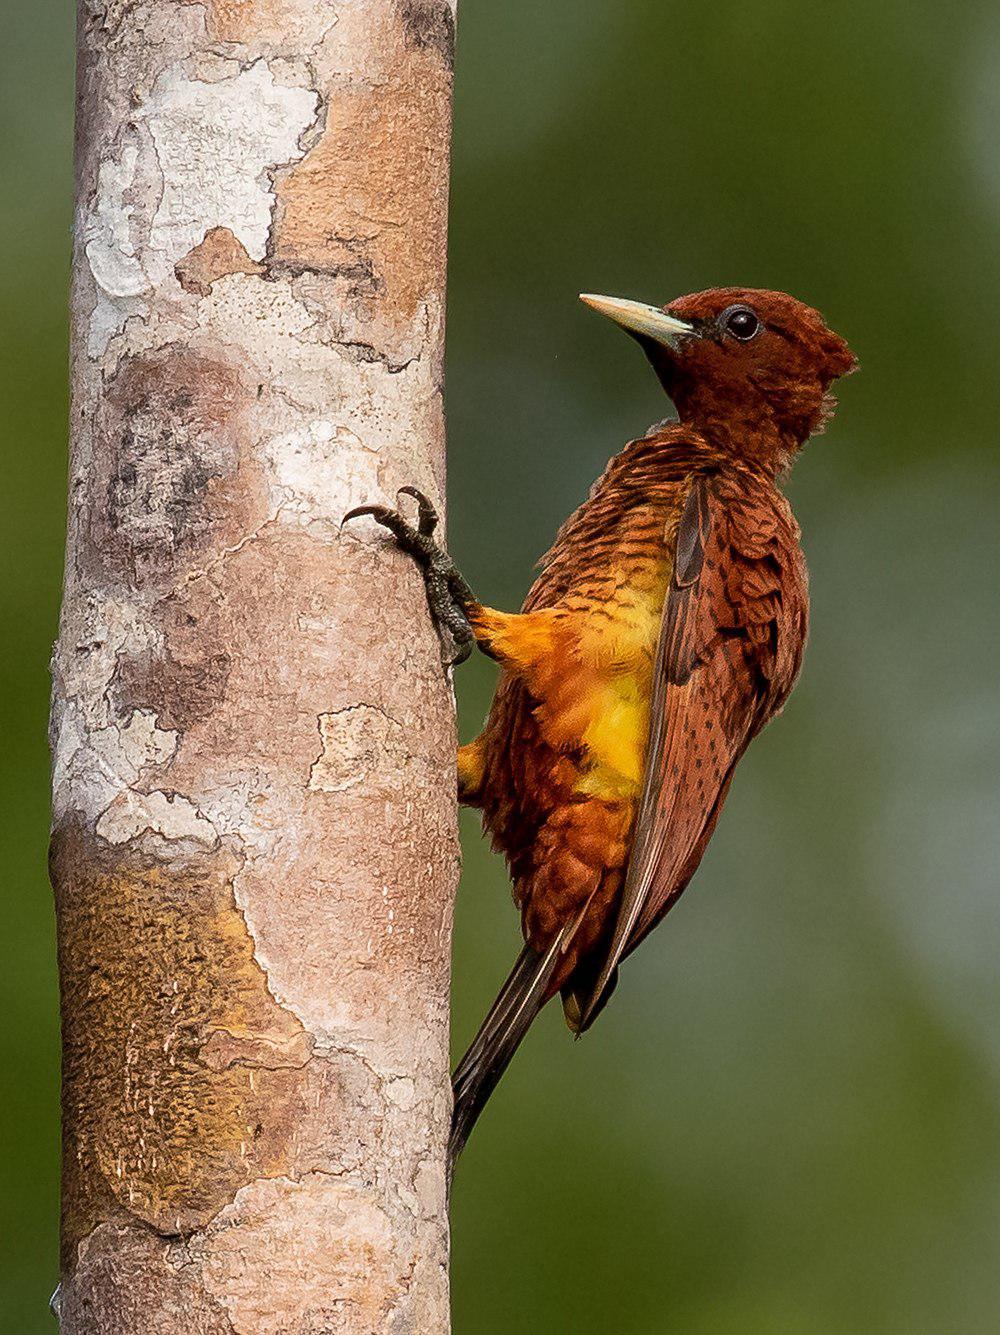 鳞胸啄木鸟 / Scaly-breasted Woodpecker / Celeus grammicus